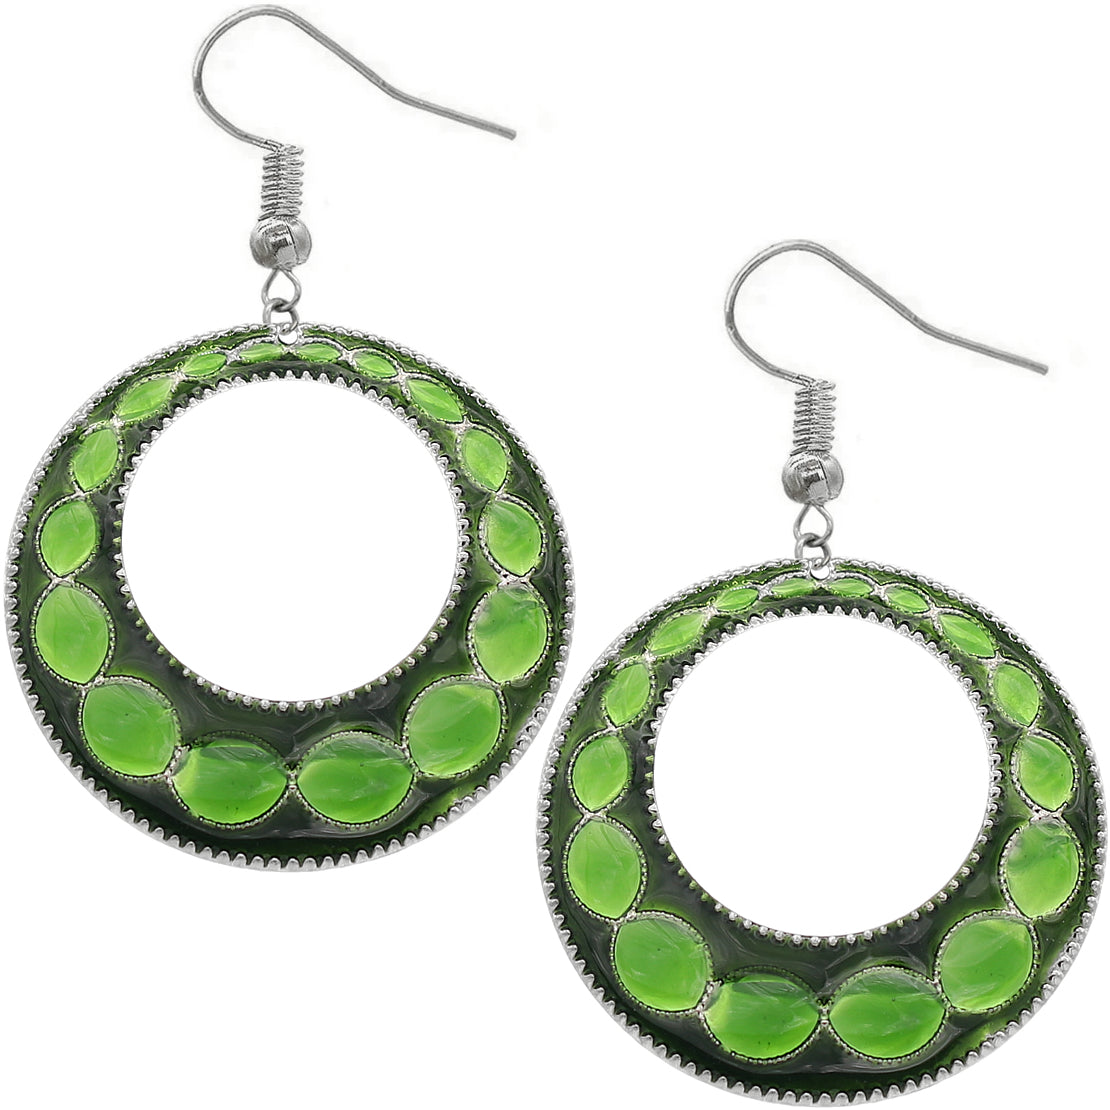 Green Glossy Open Circle Thin Metal Earrings